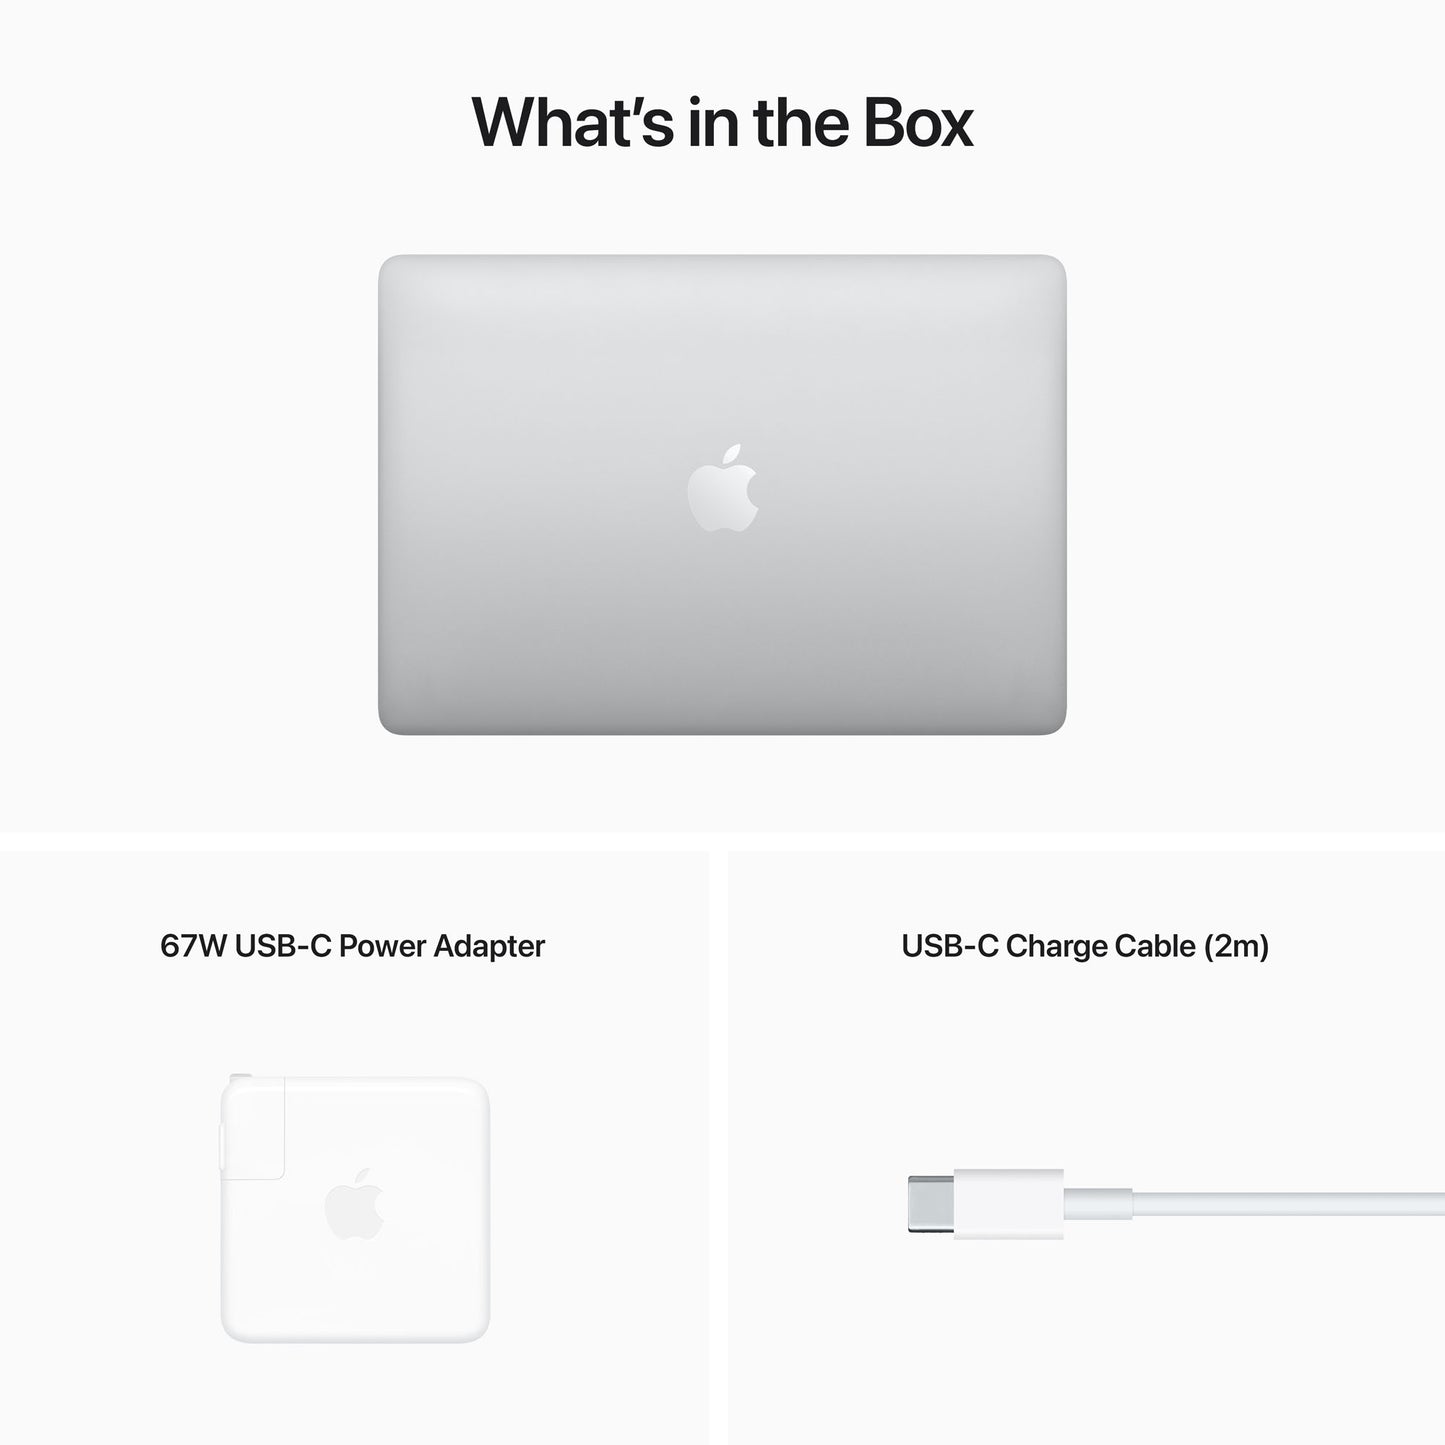 13-inch MacBook Pro: Apple M2 chip with 8-core CPU and 10-core GPU 256GB SSD - Silver